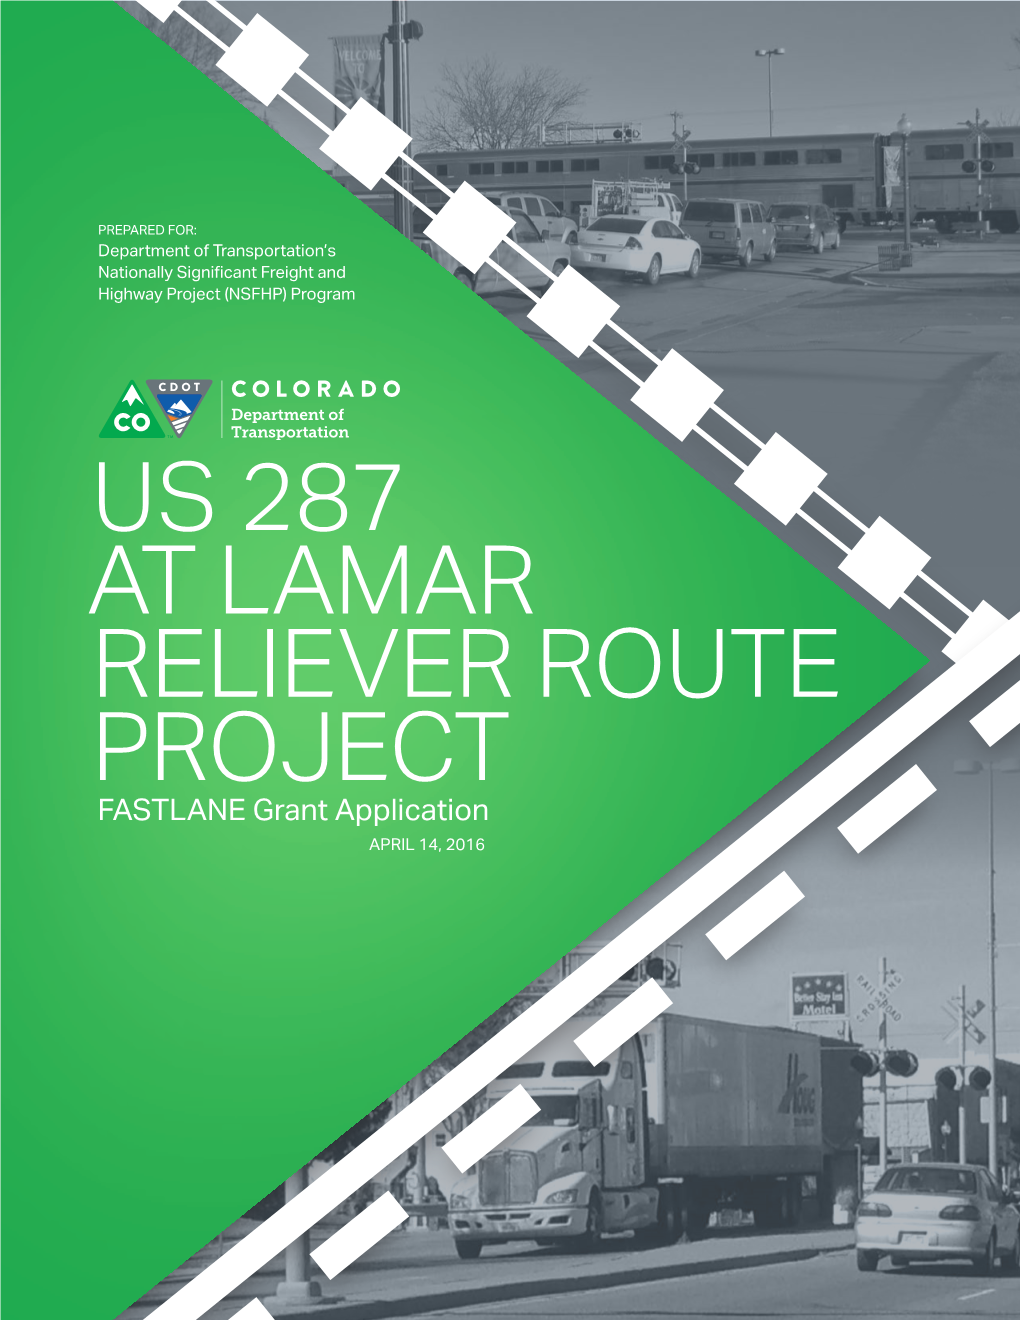 US 287 at LAMAR RELIEVER ROUTE PROJECTFASTLANE Grant Application APRIL 14, 2016